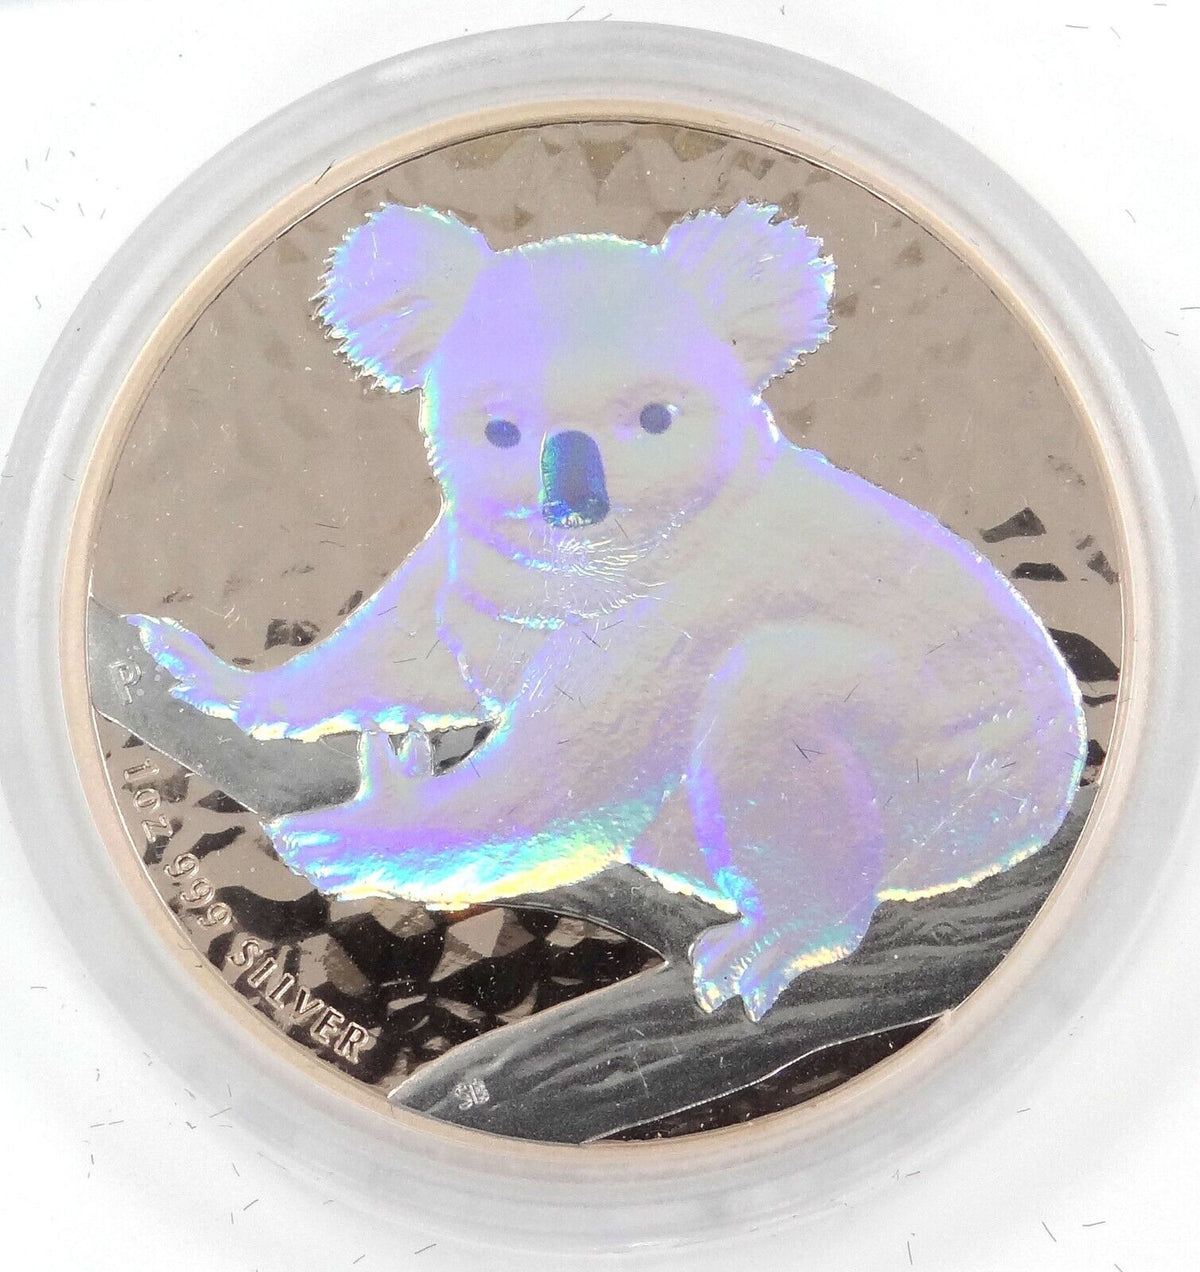 1 Oz Silver Coin 2009 Australia $1 Koala Hologram in Capsule and Box